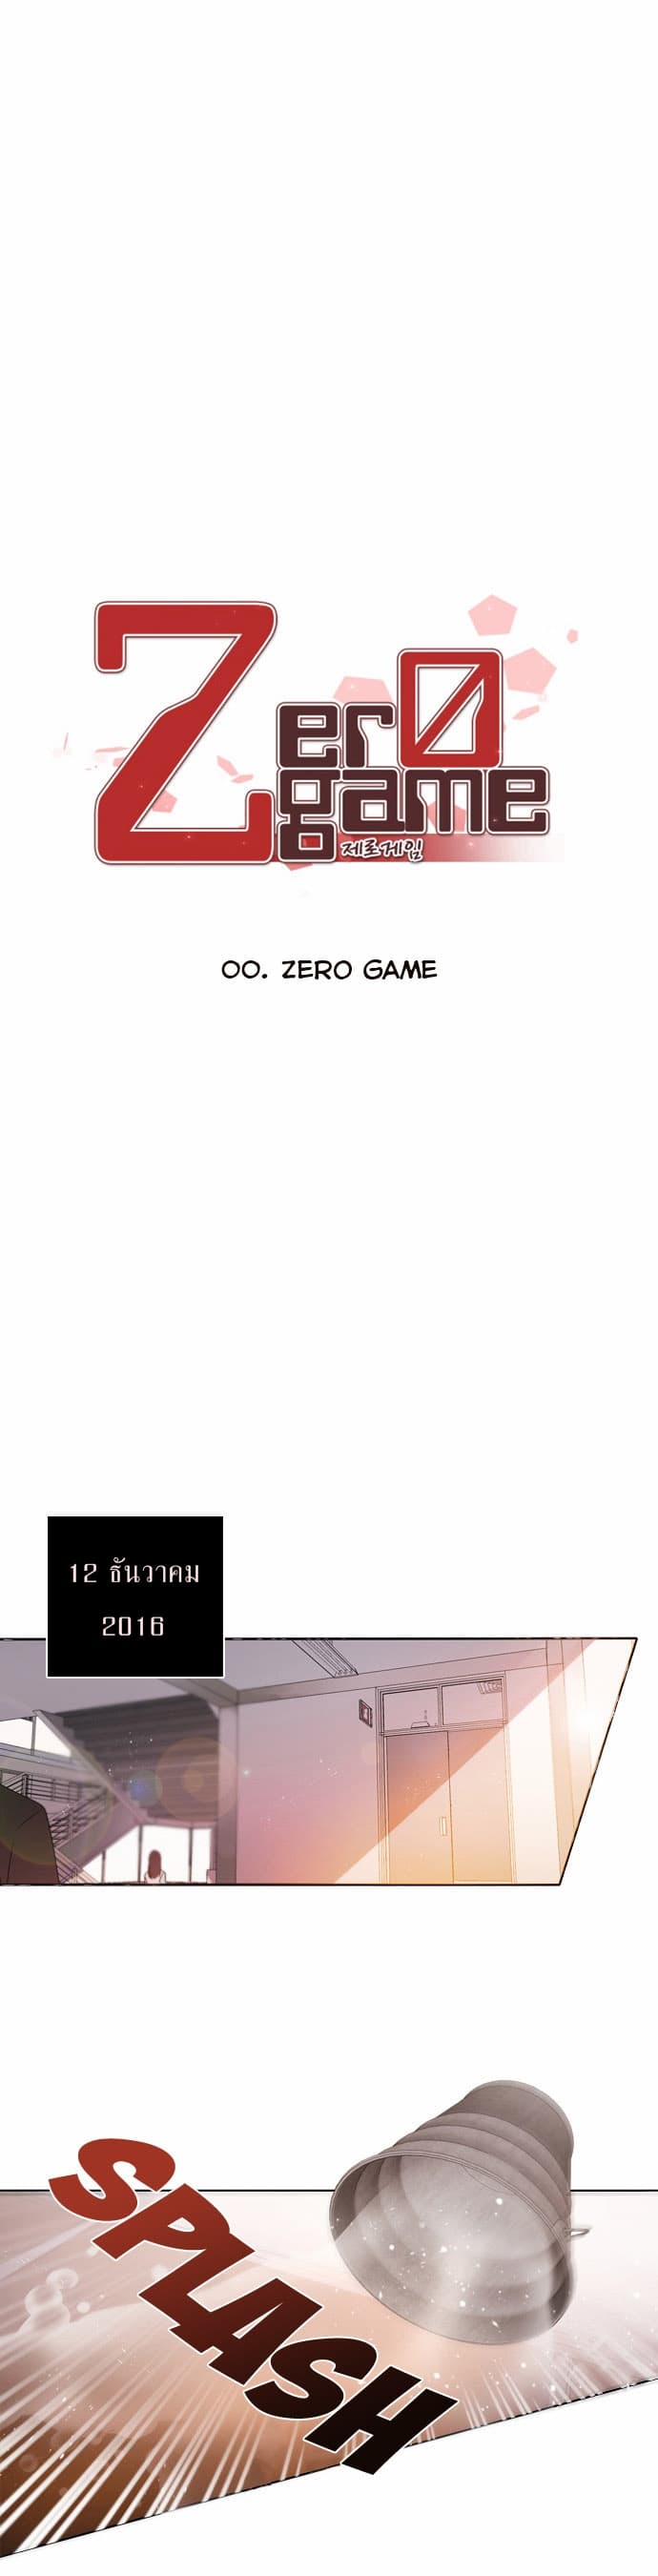 Zero Game0 05